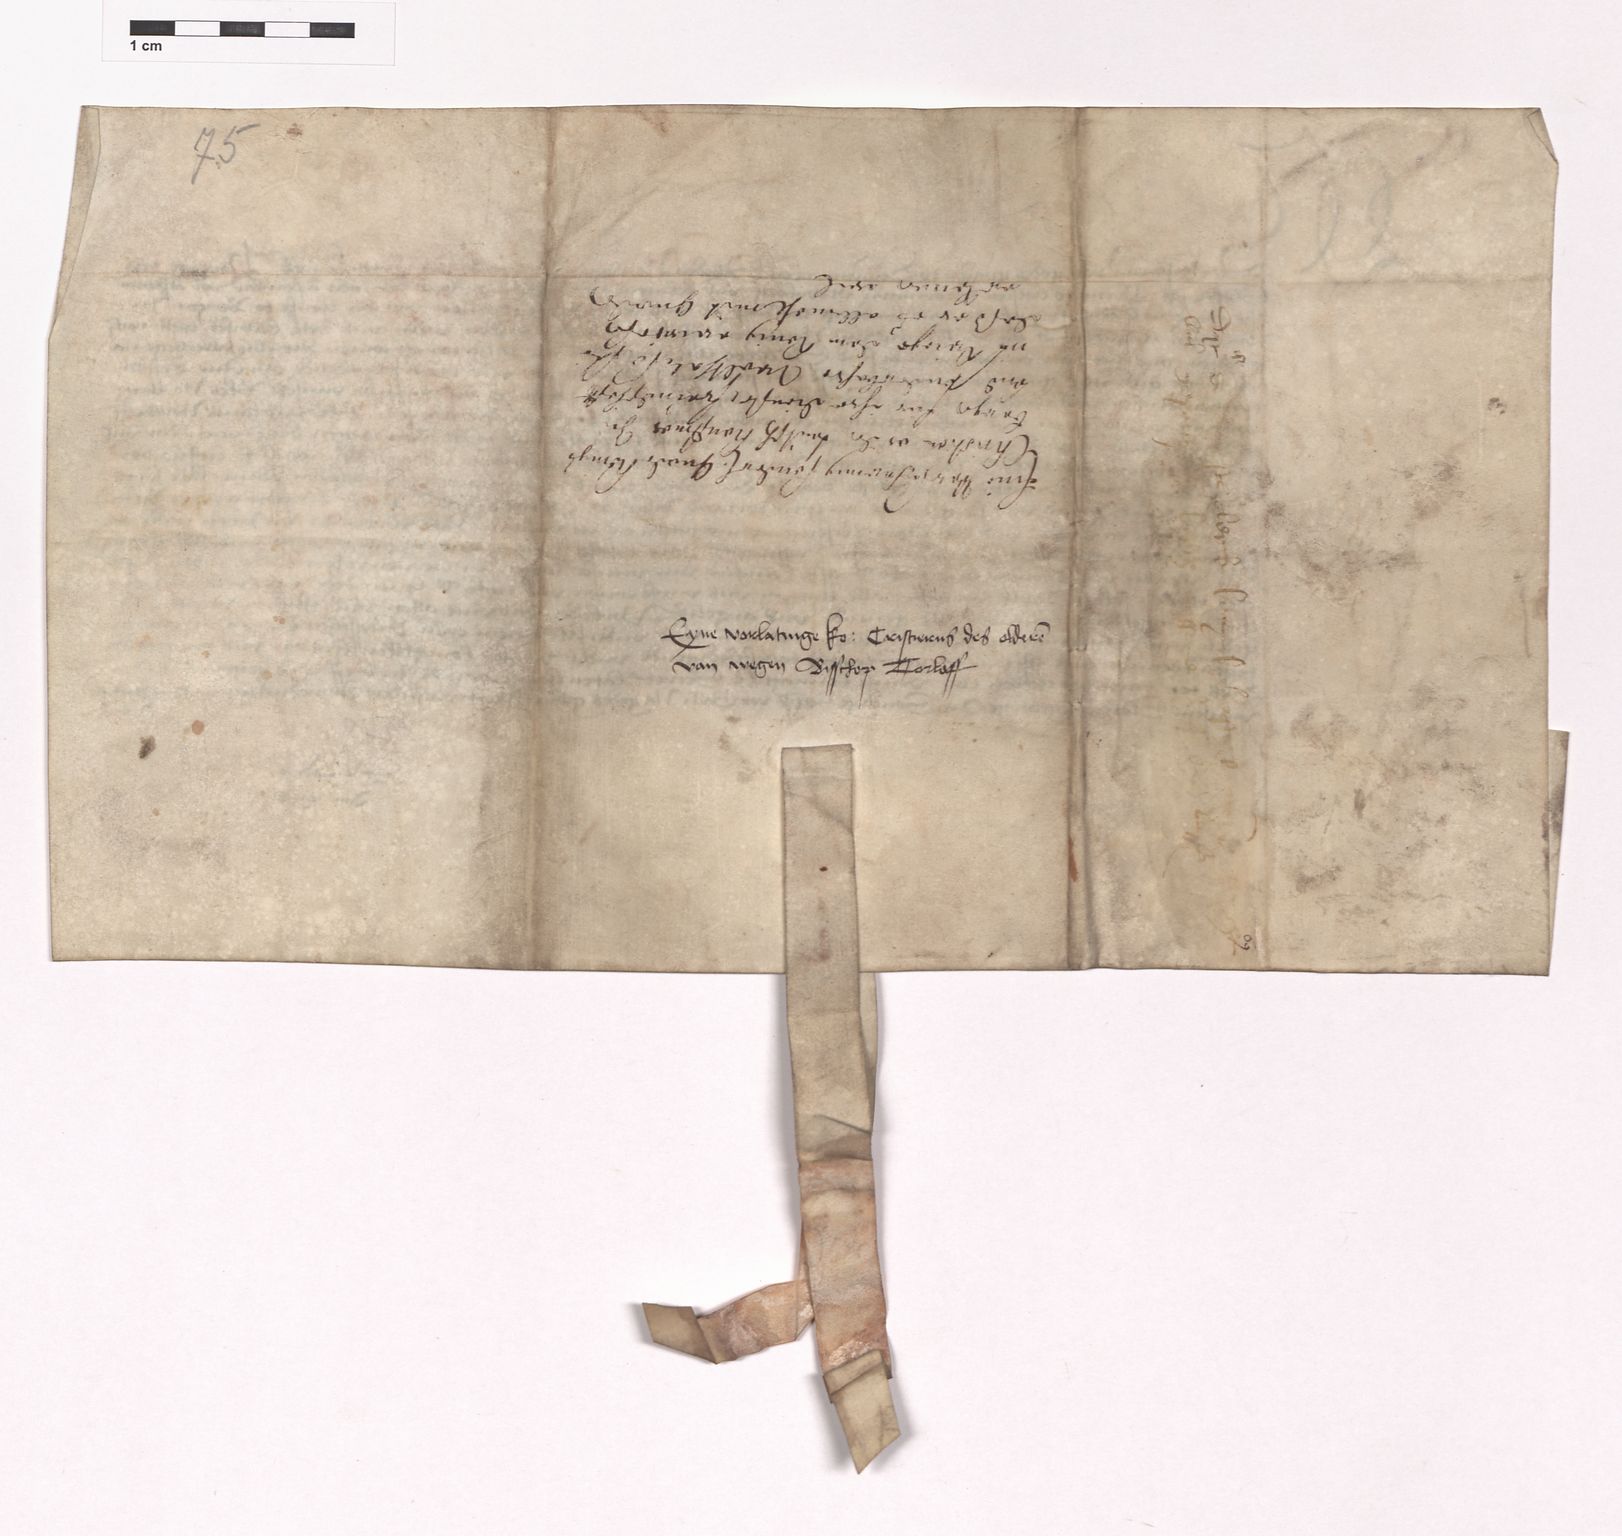 07.1 Urkunden, 3 Auswärtige Beziehungen (Externa), AHL/-/21: Norwegen (Norvagica); Kontor zu Bergen, 1247-1747, s. 764